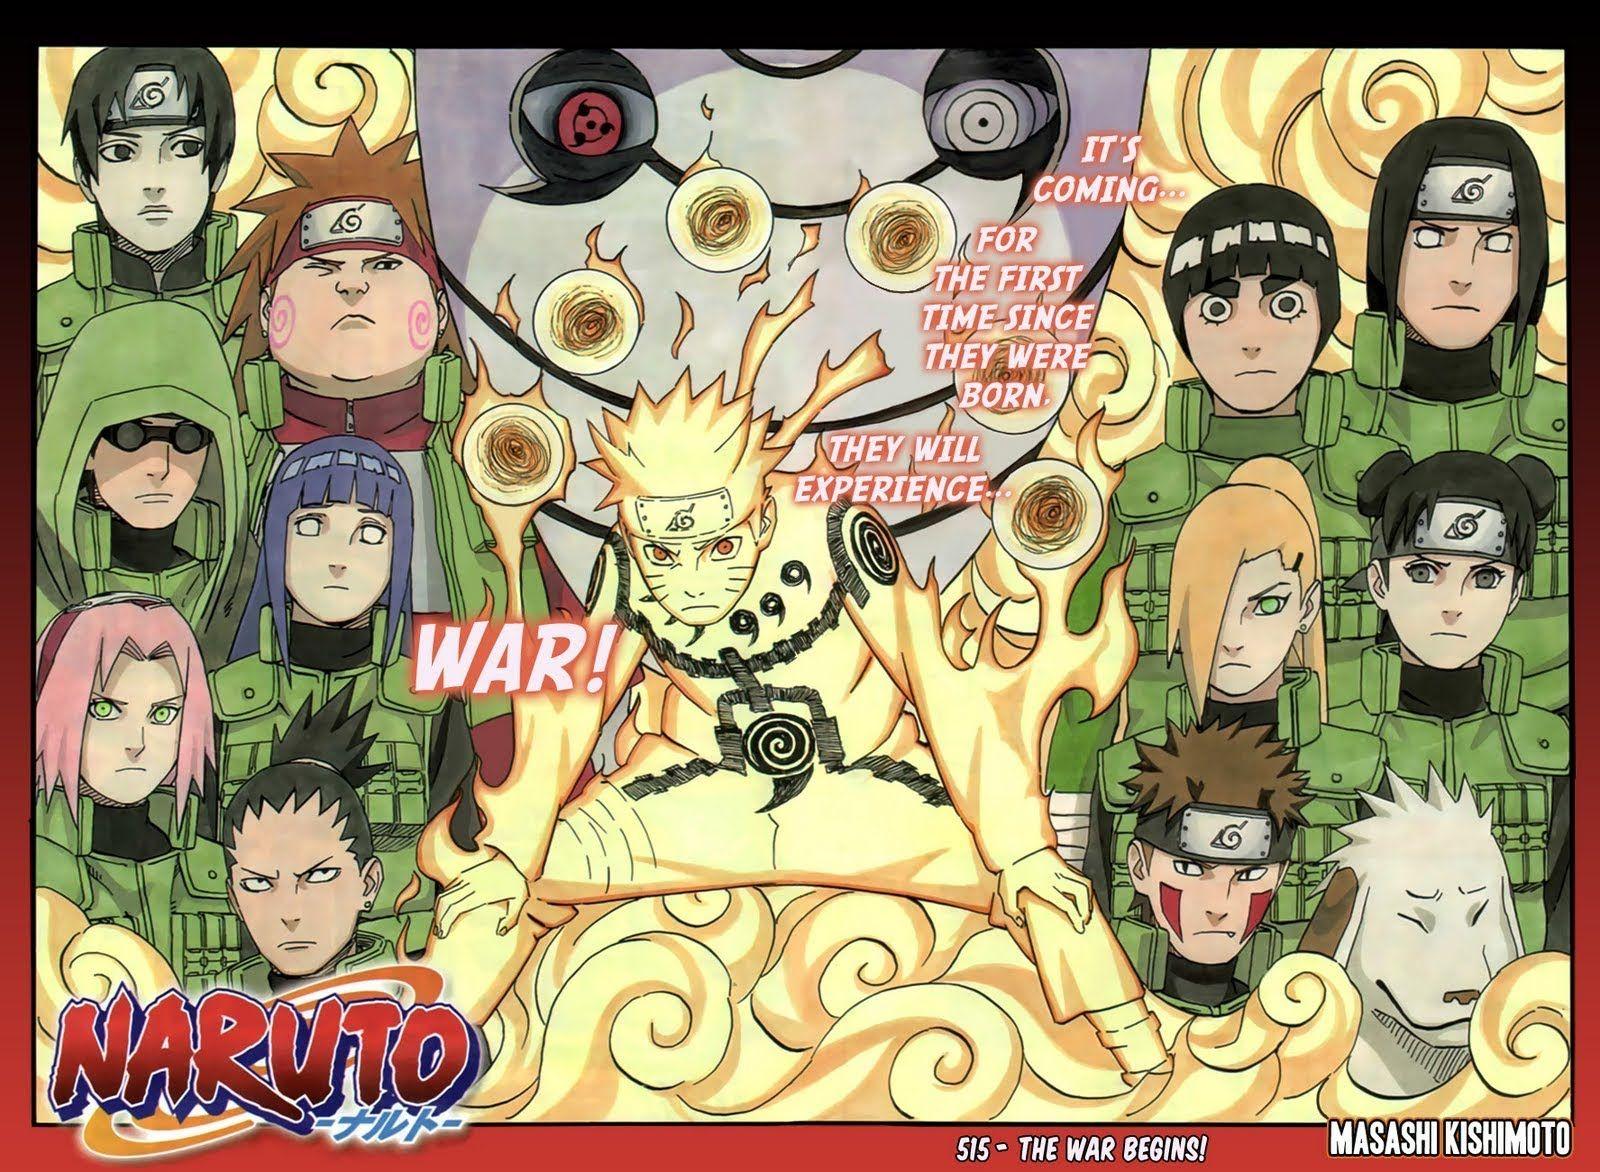 4th Great Ninja War! Last Arc in Naruto!?